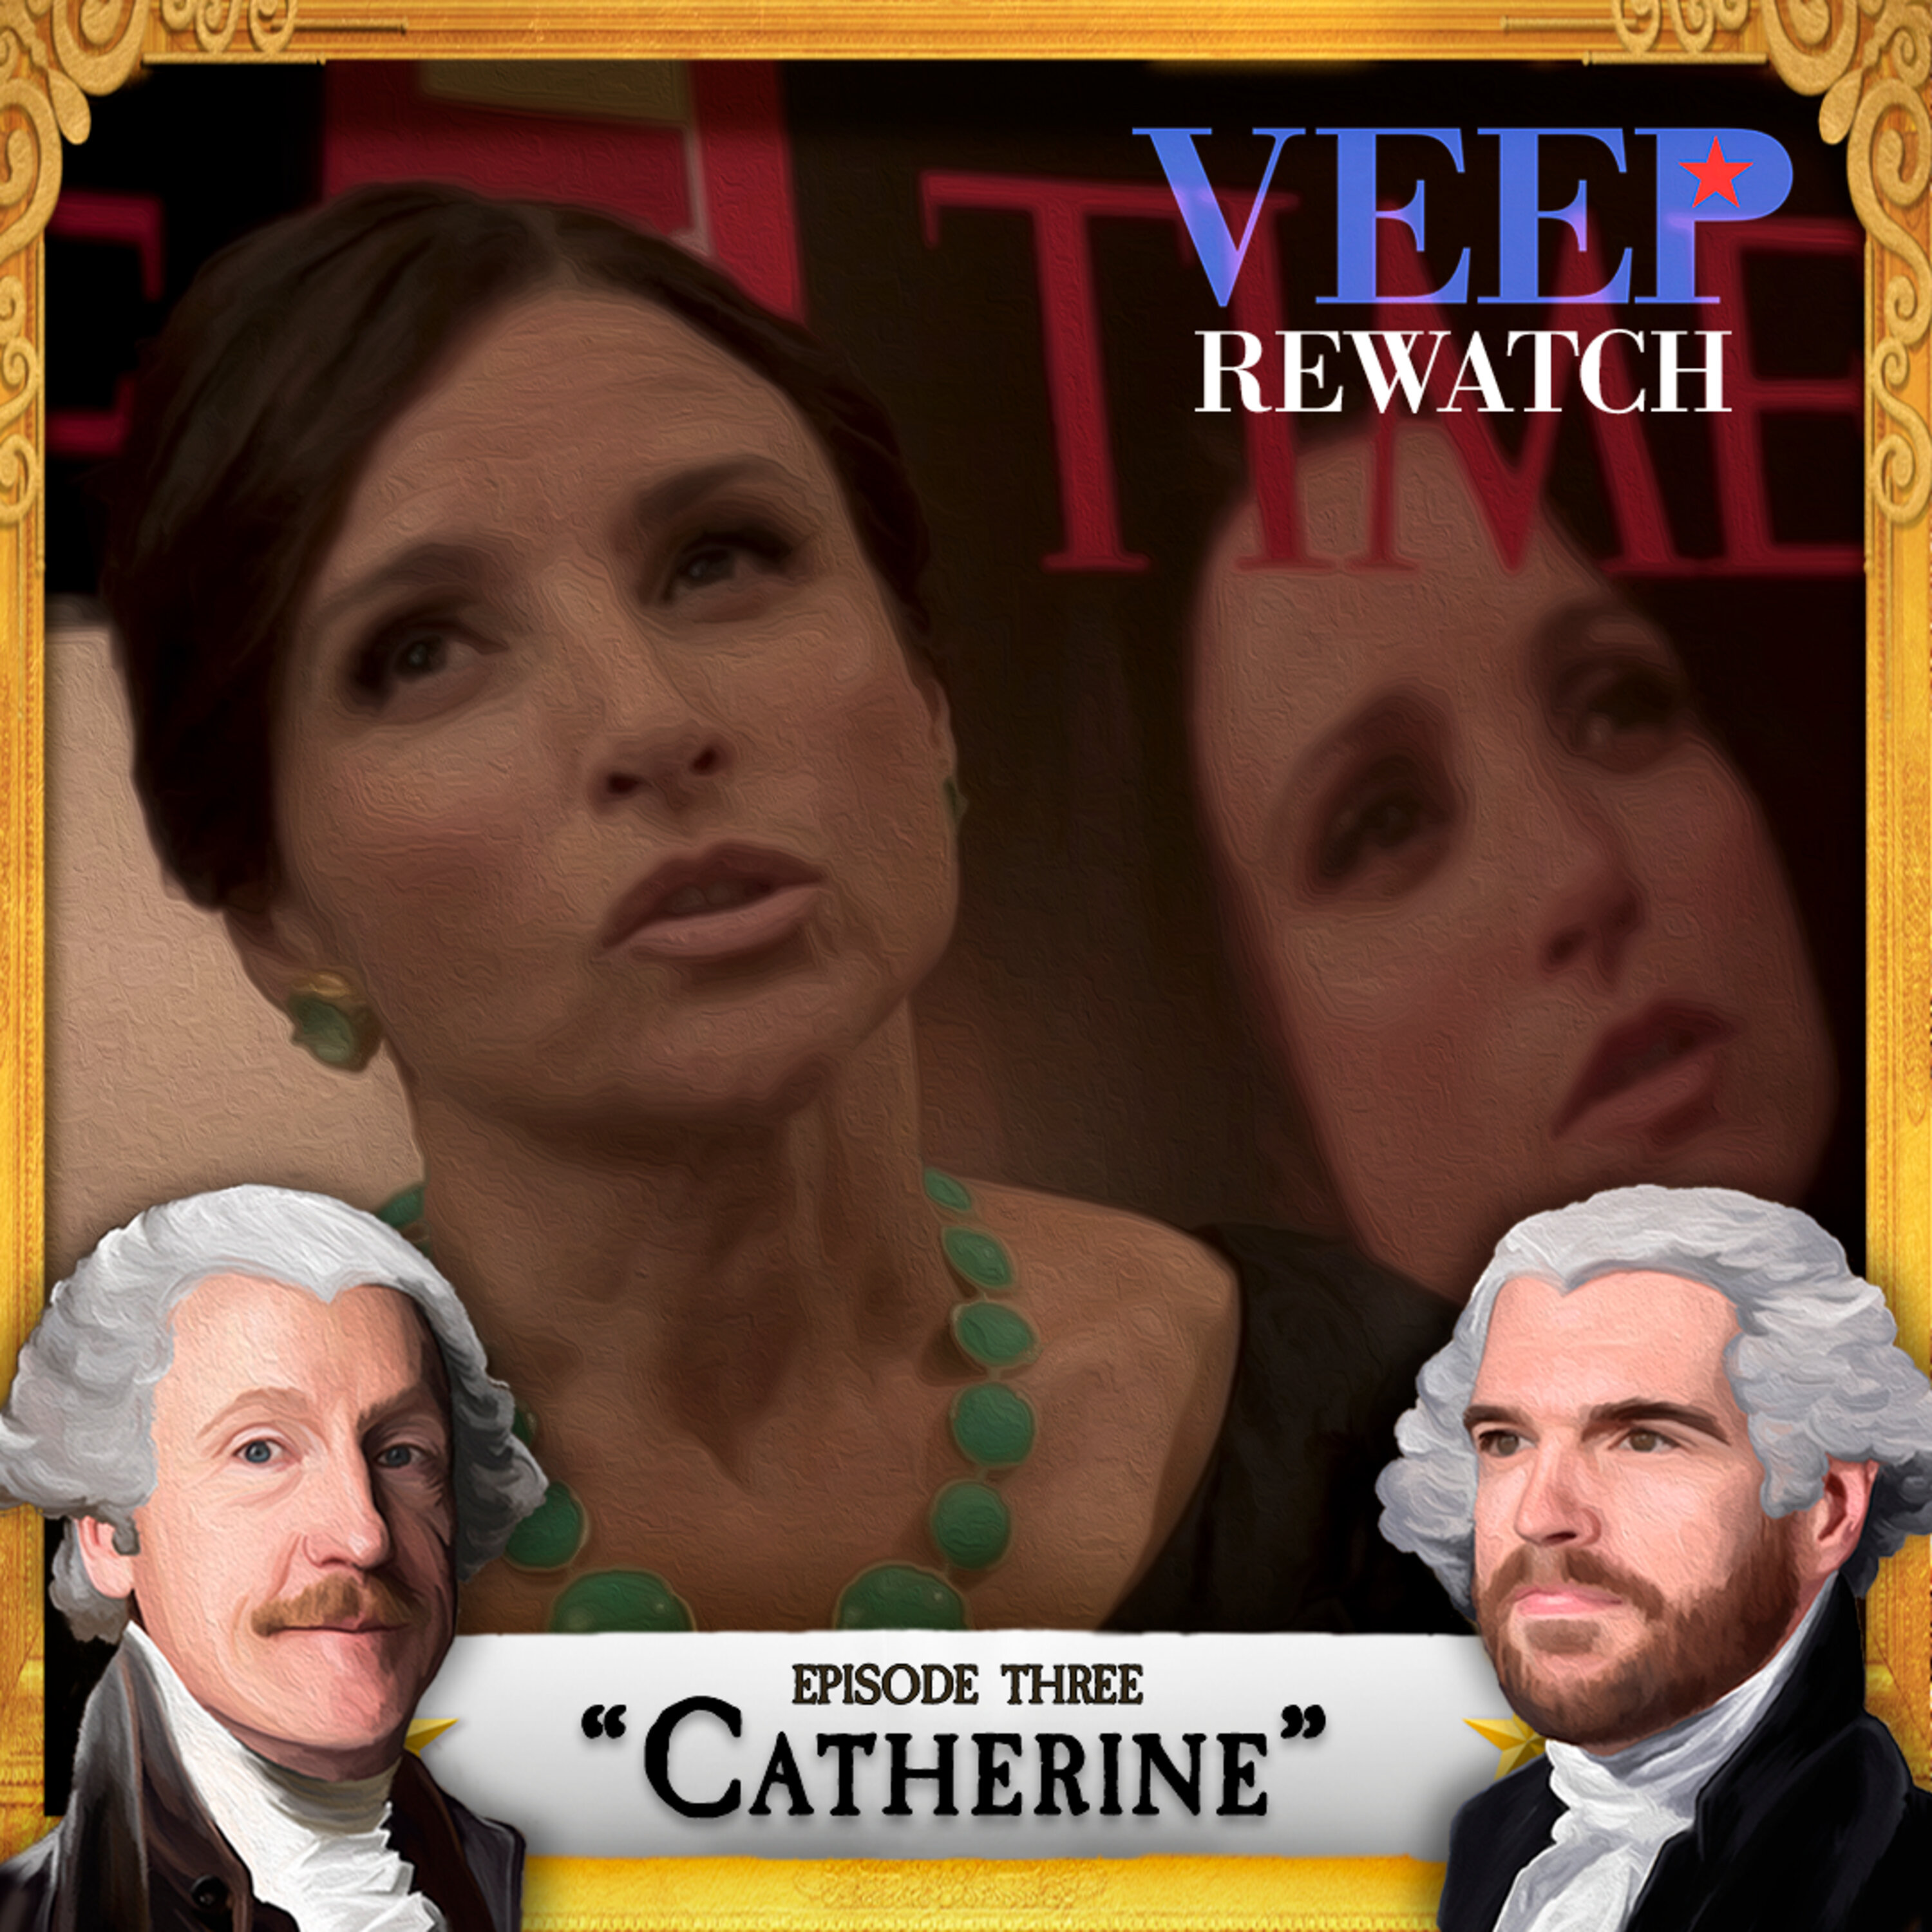 “Catherine” (S1E3) Veep Rewatch with Matt and Tim